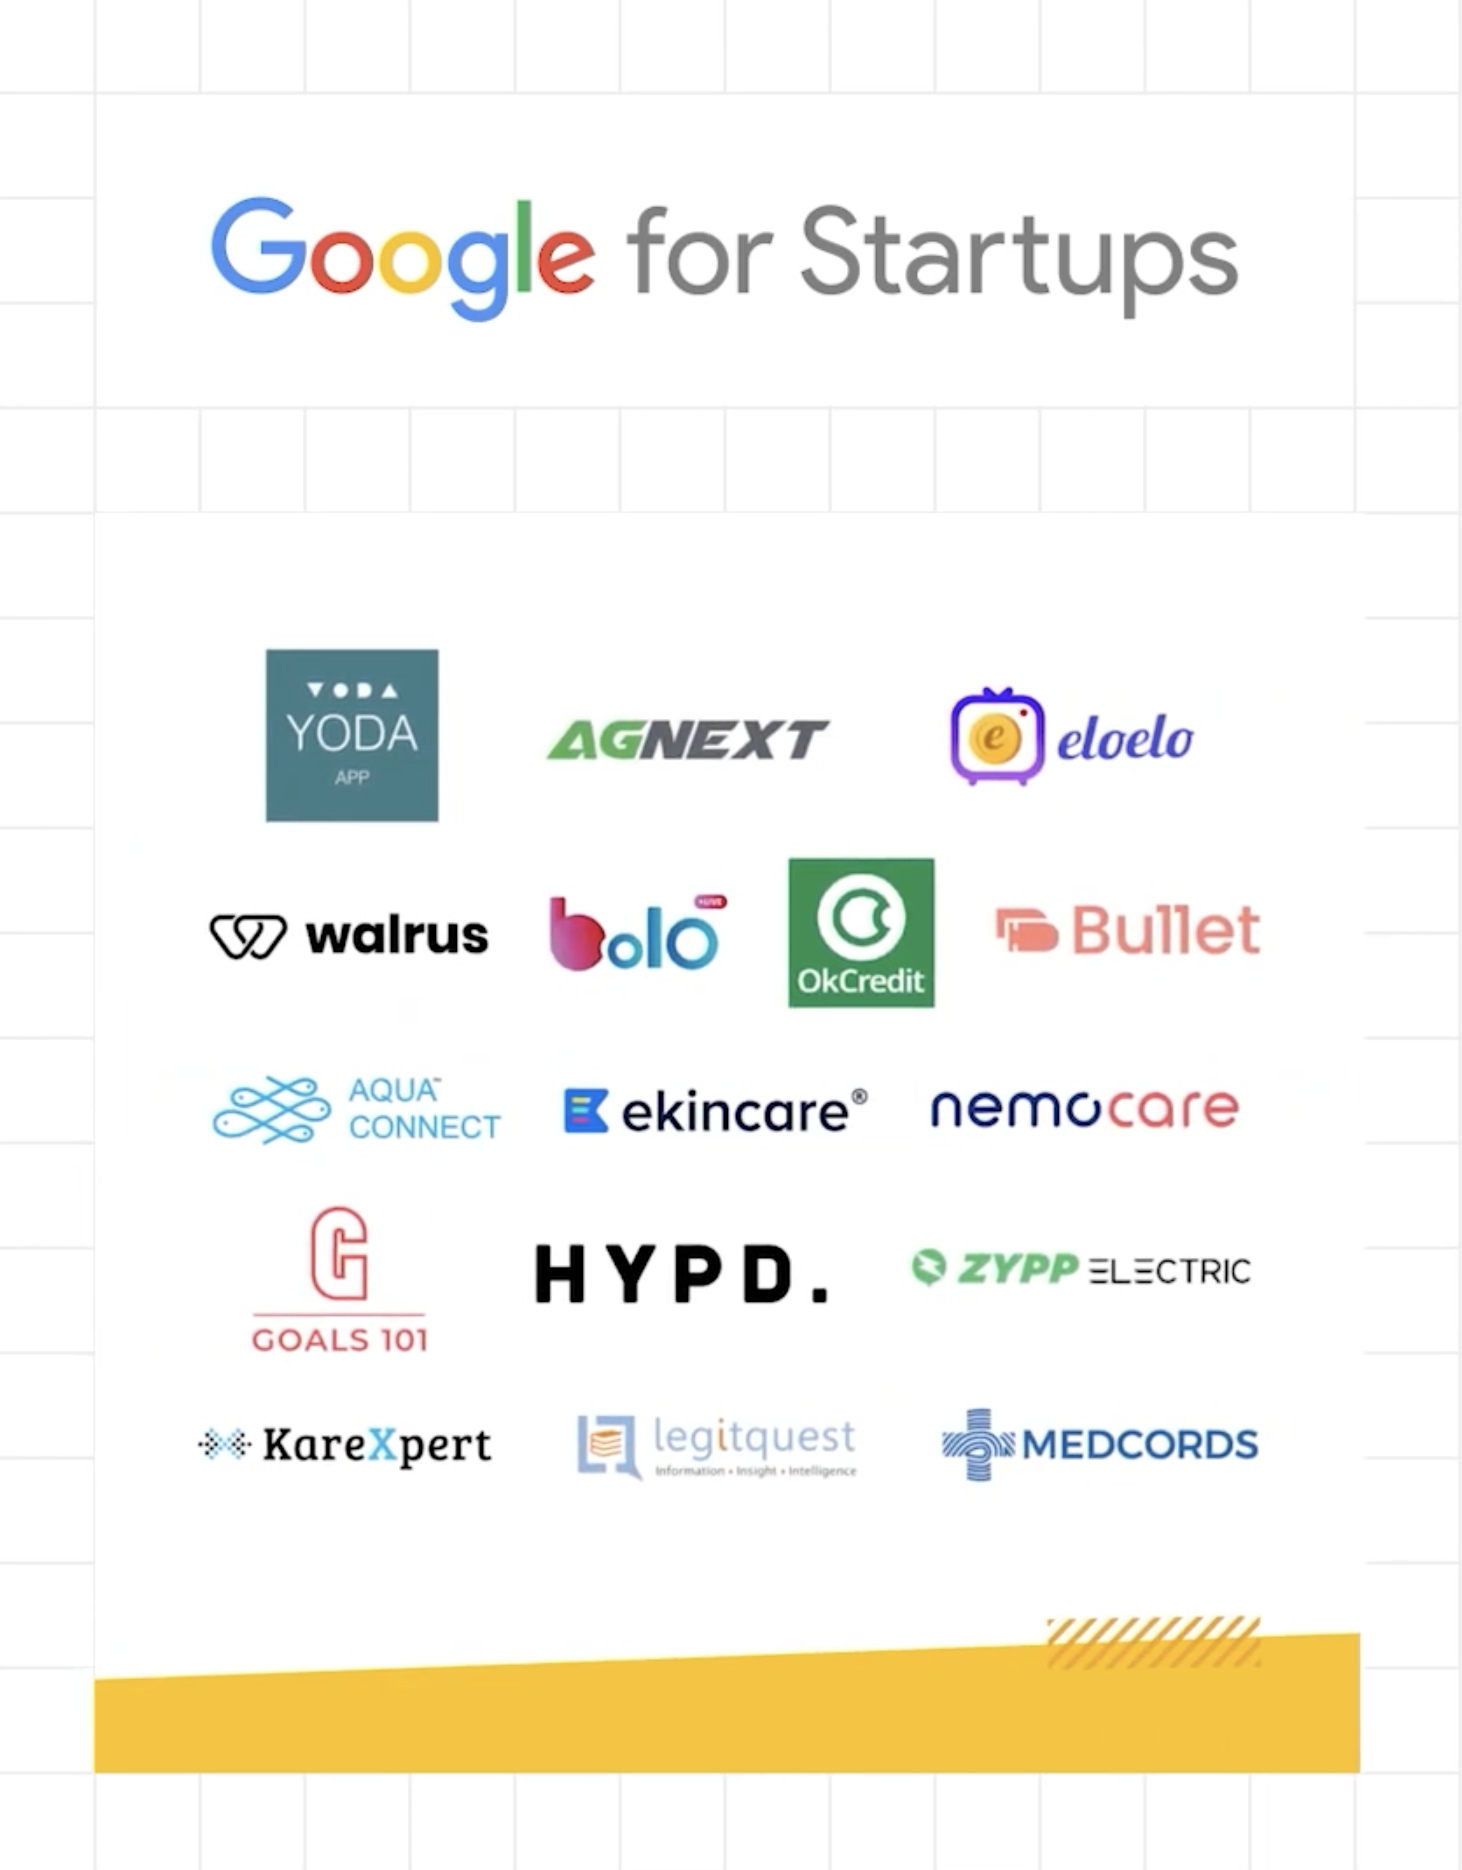 Google for startups - class 5